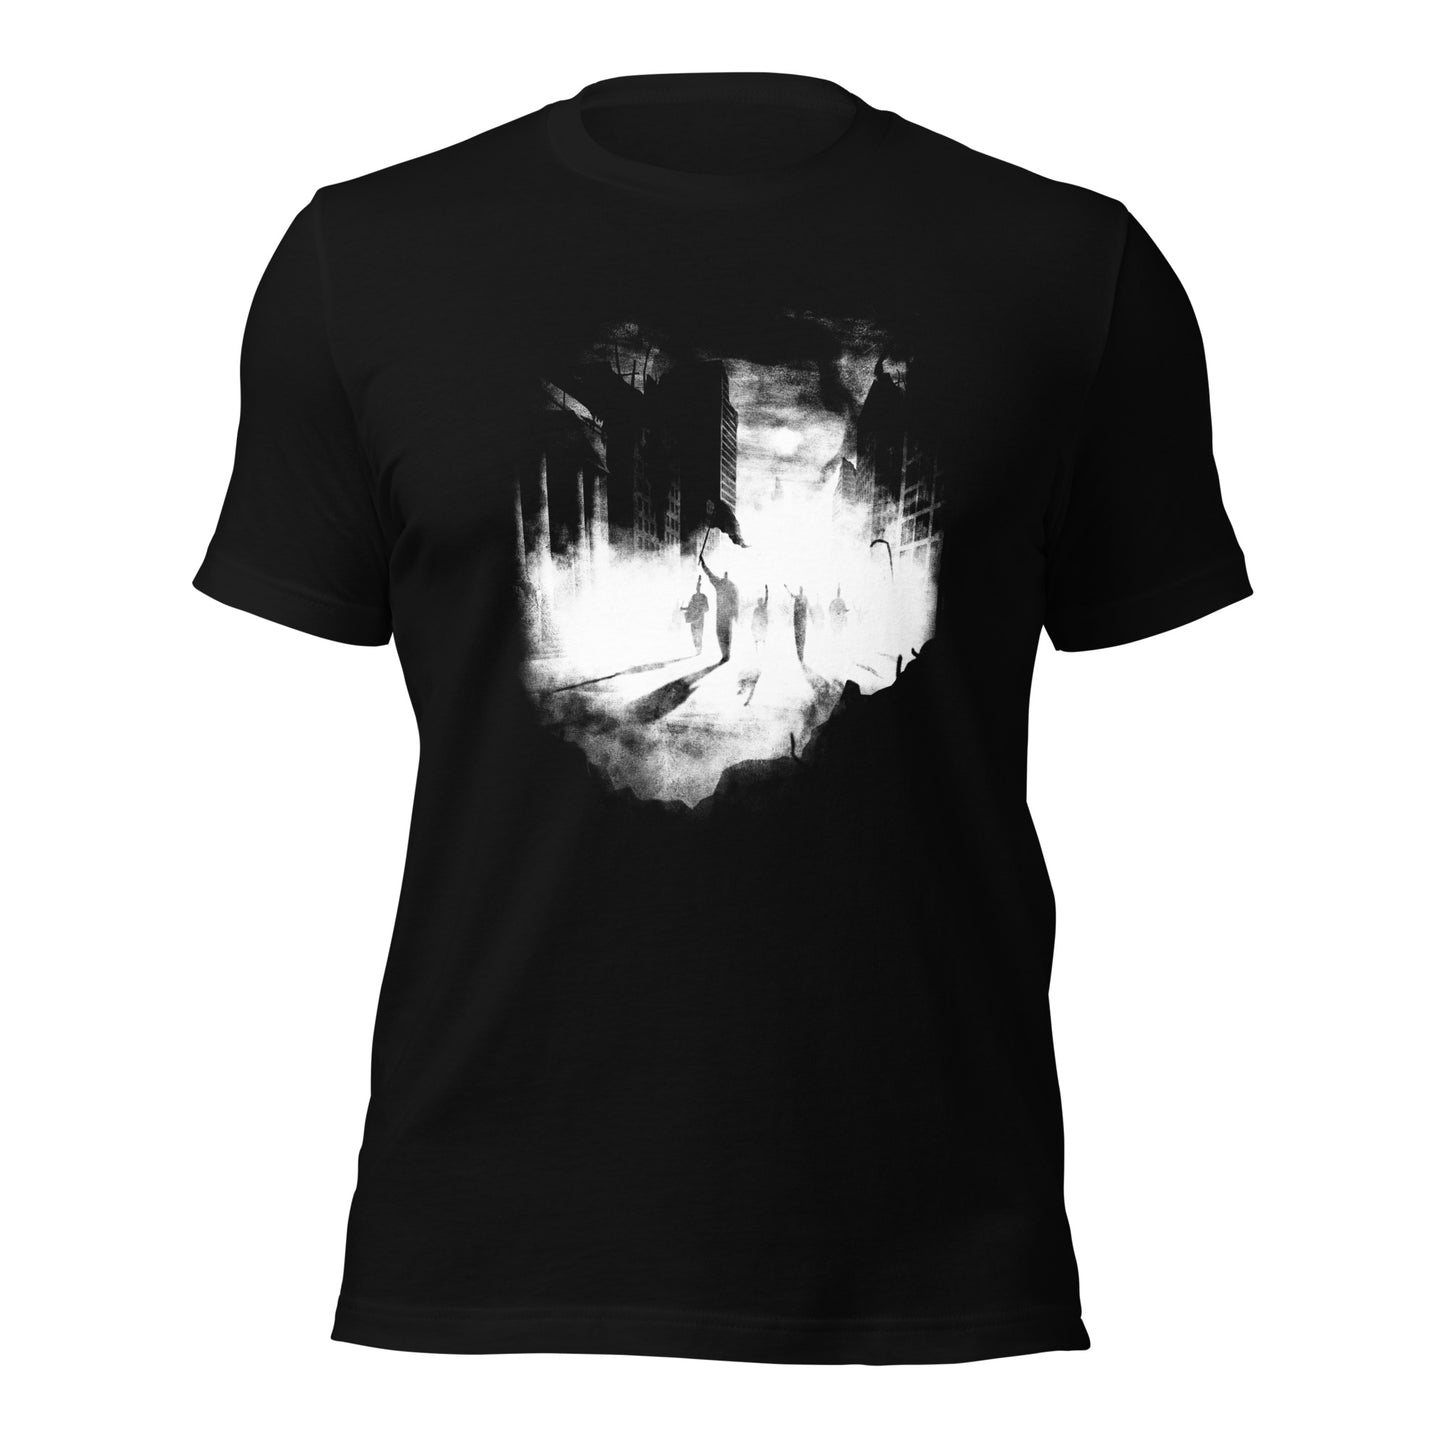 Kwoon - "Last Paradise" T-shirt